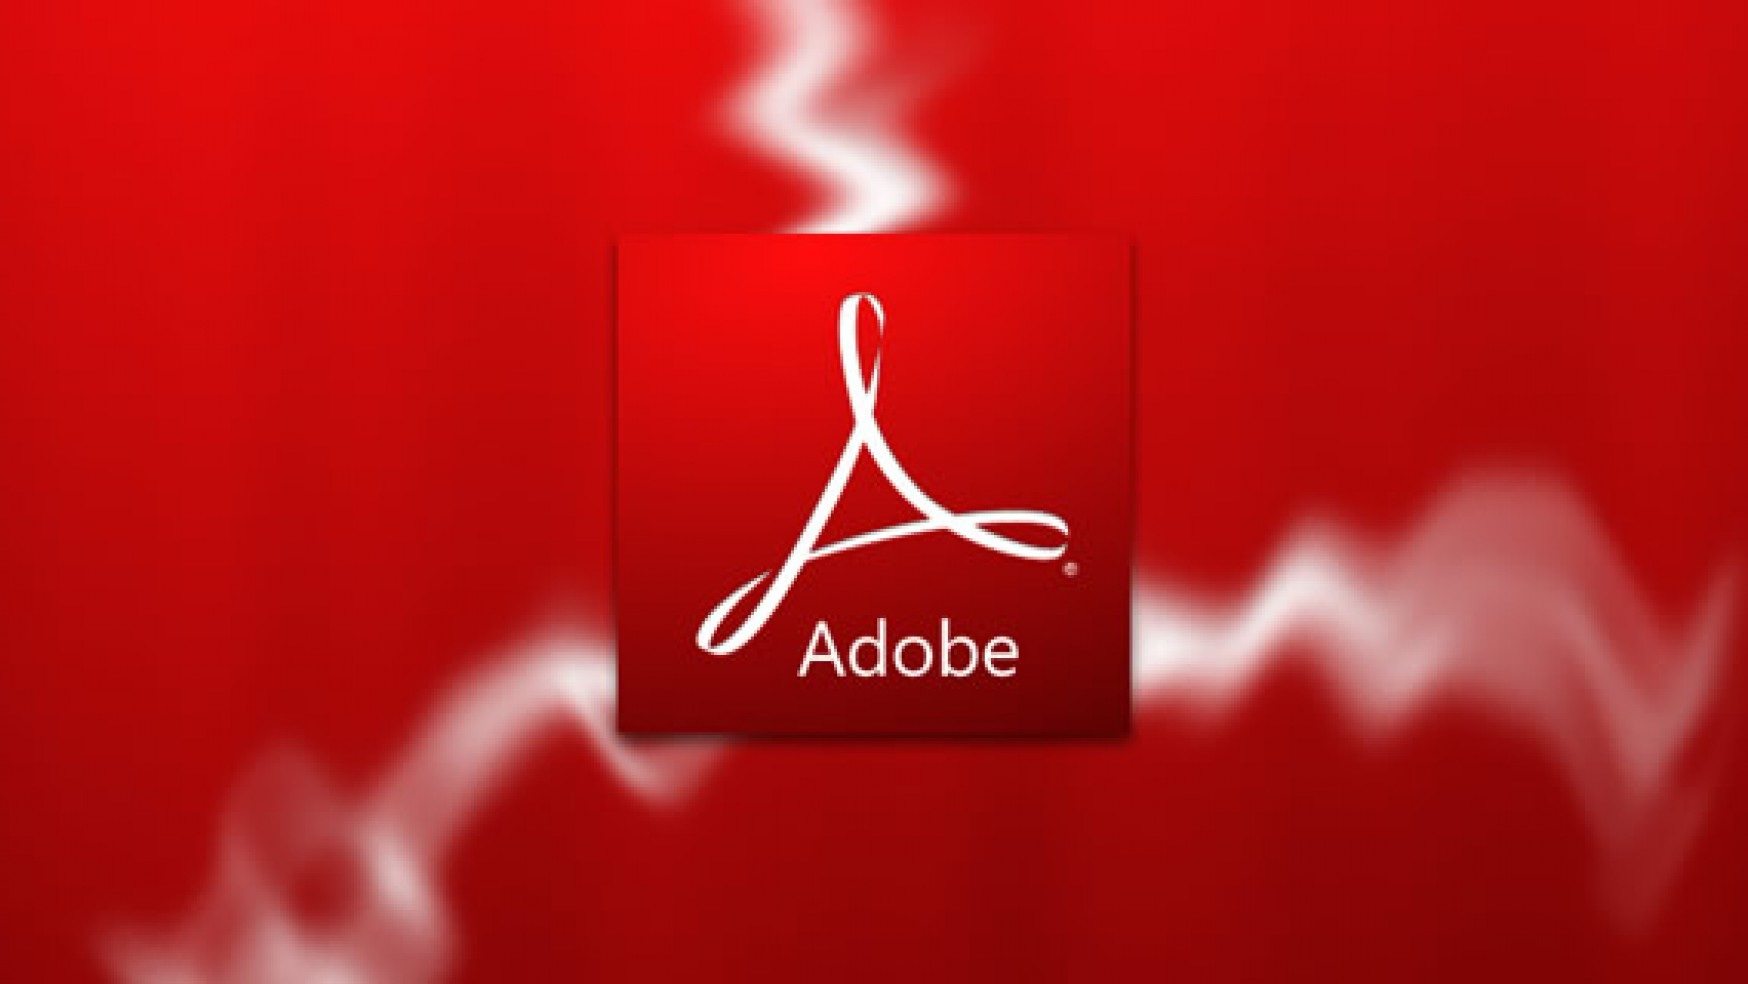 Mac adobe flash player free download windows 10